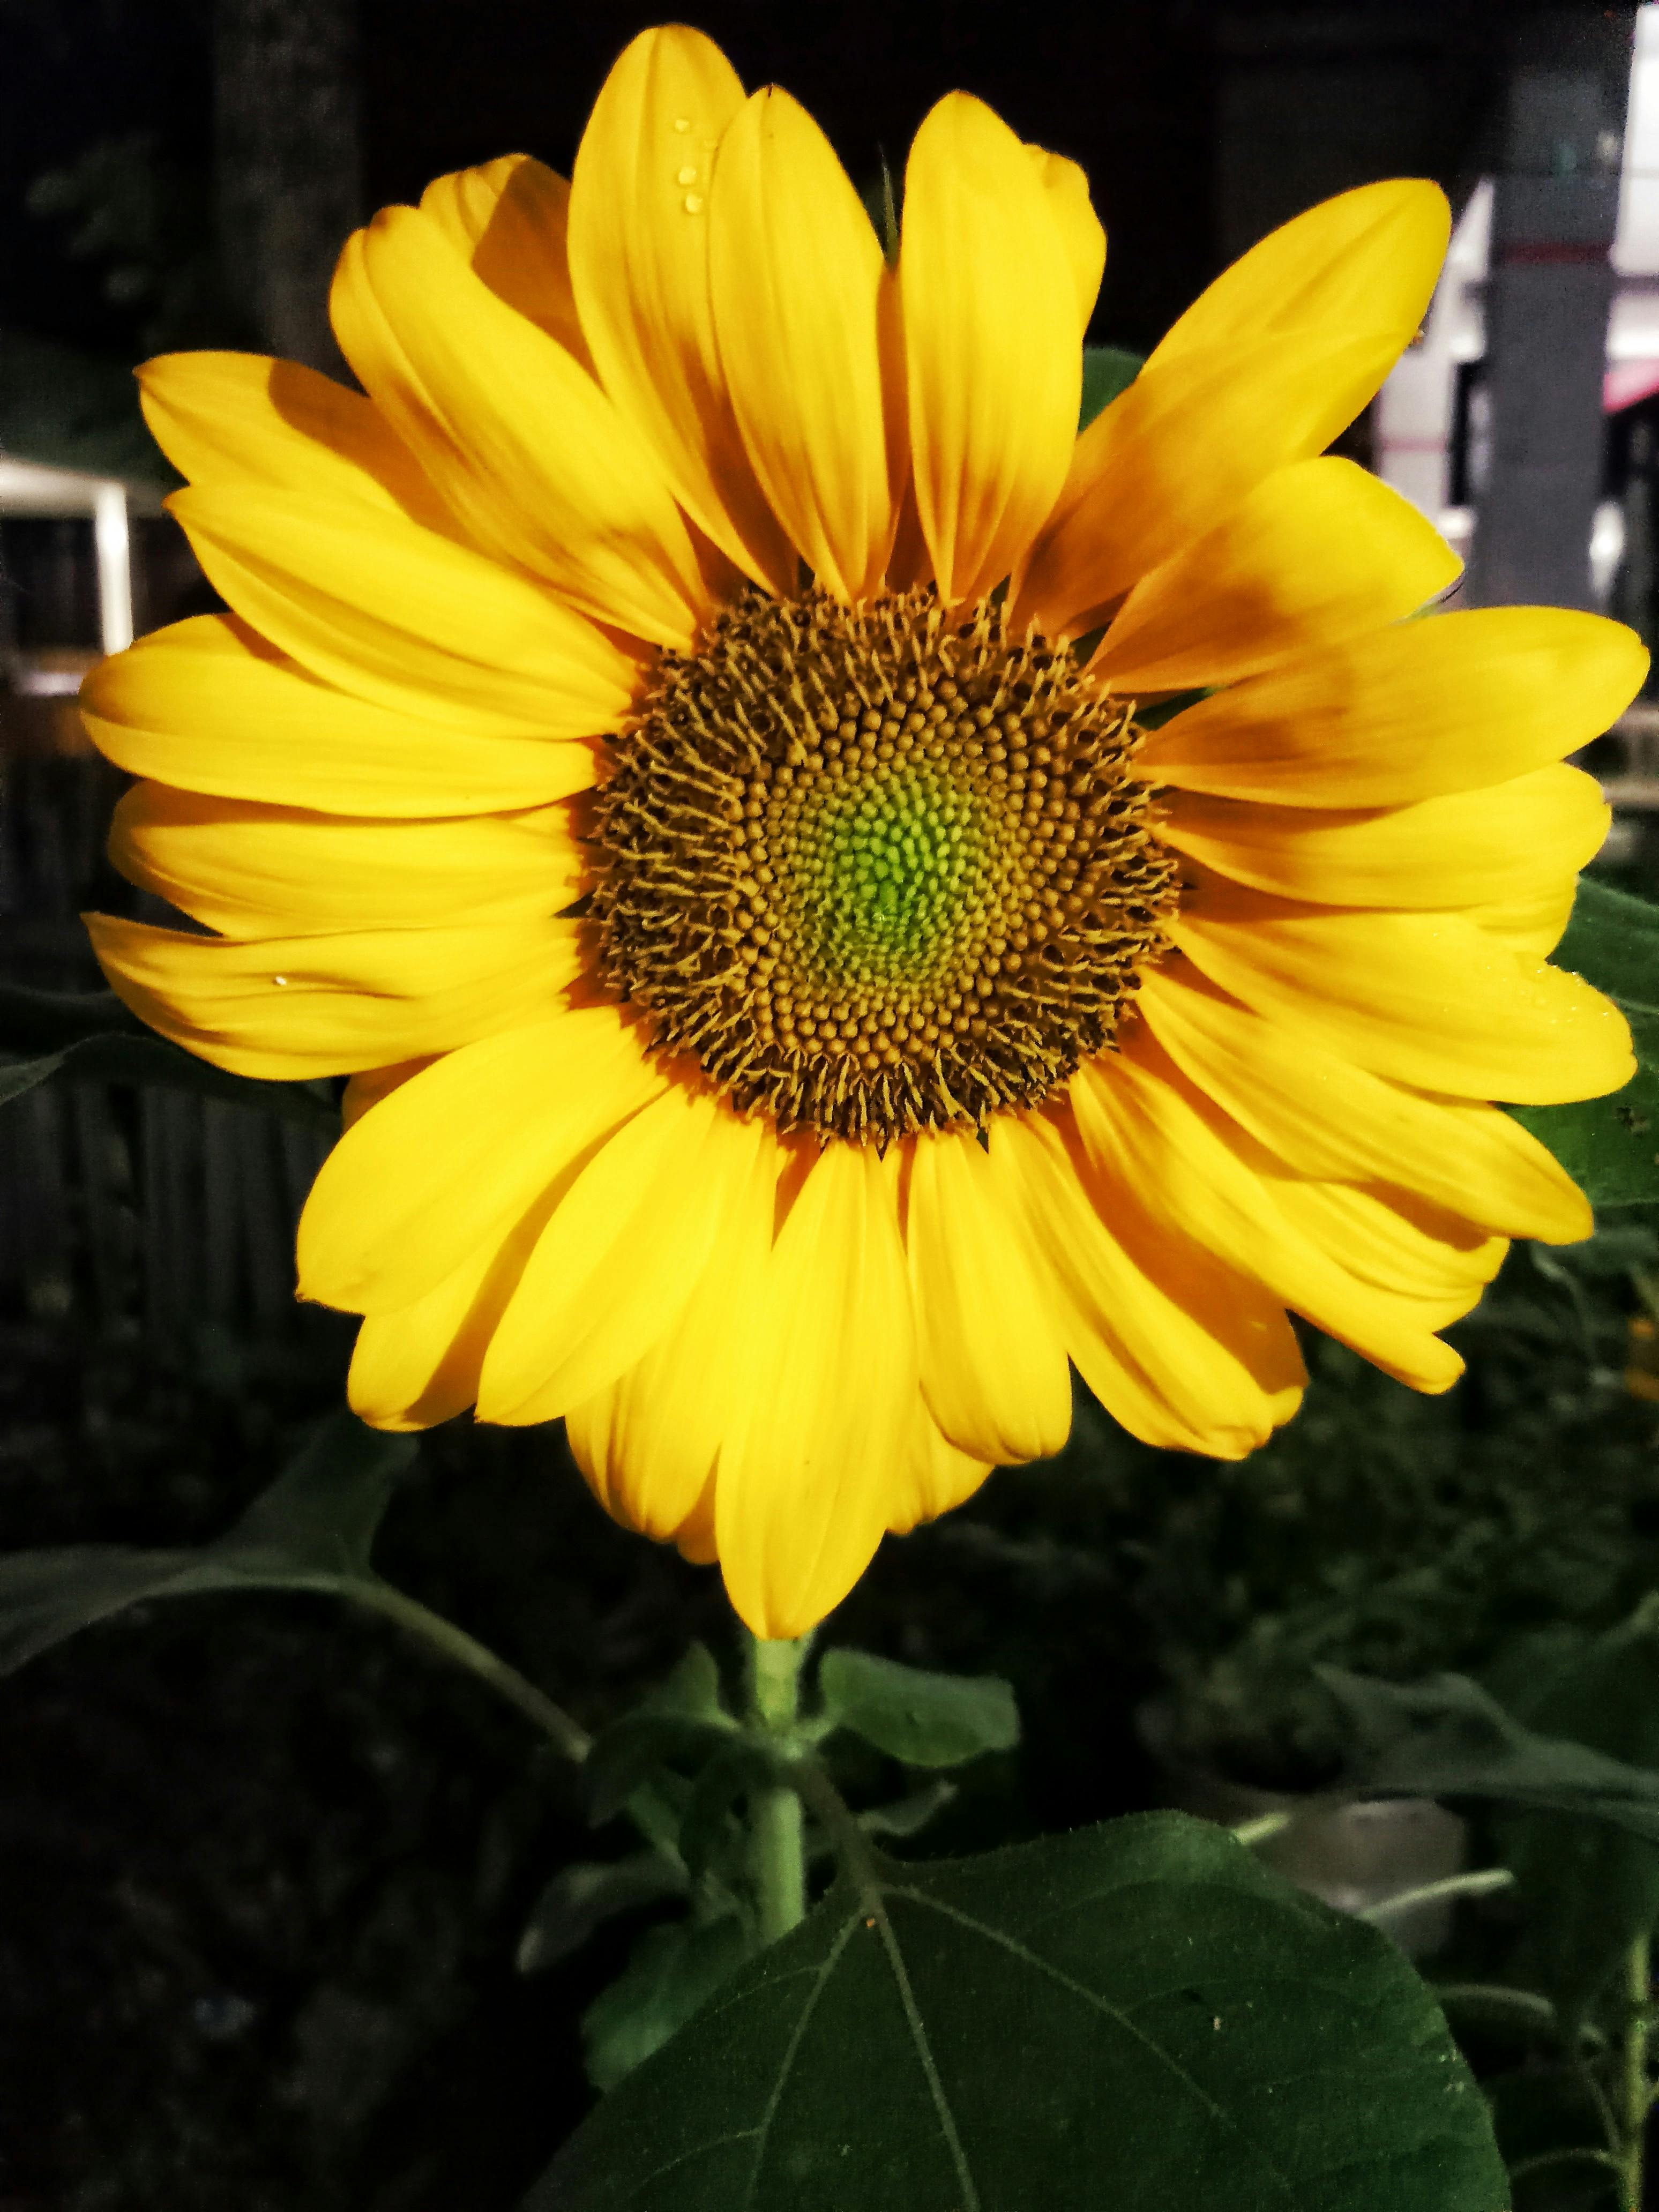 Wow 15+ Gambar Bunga Matahari Pagi - Gambar Bunga Indah